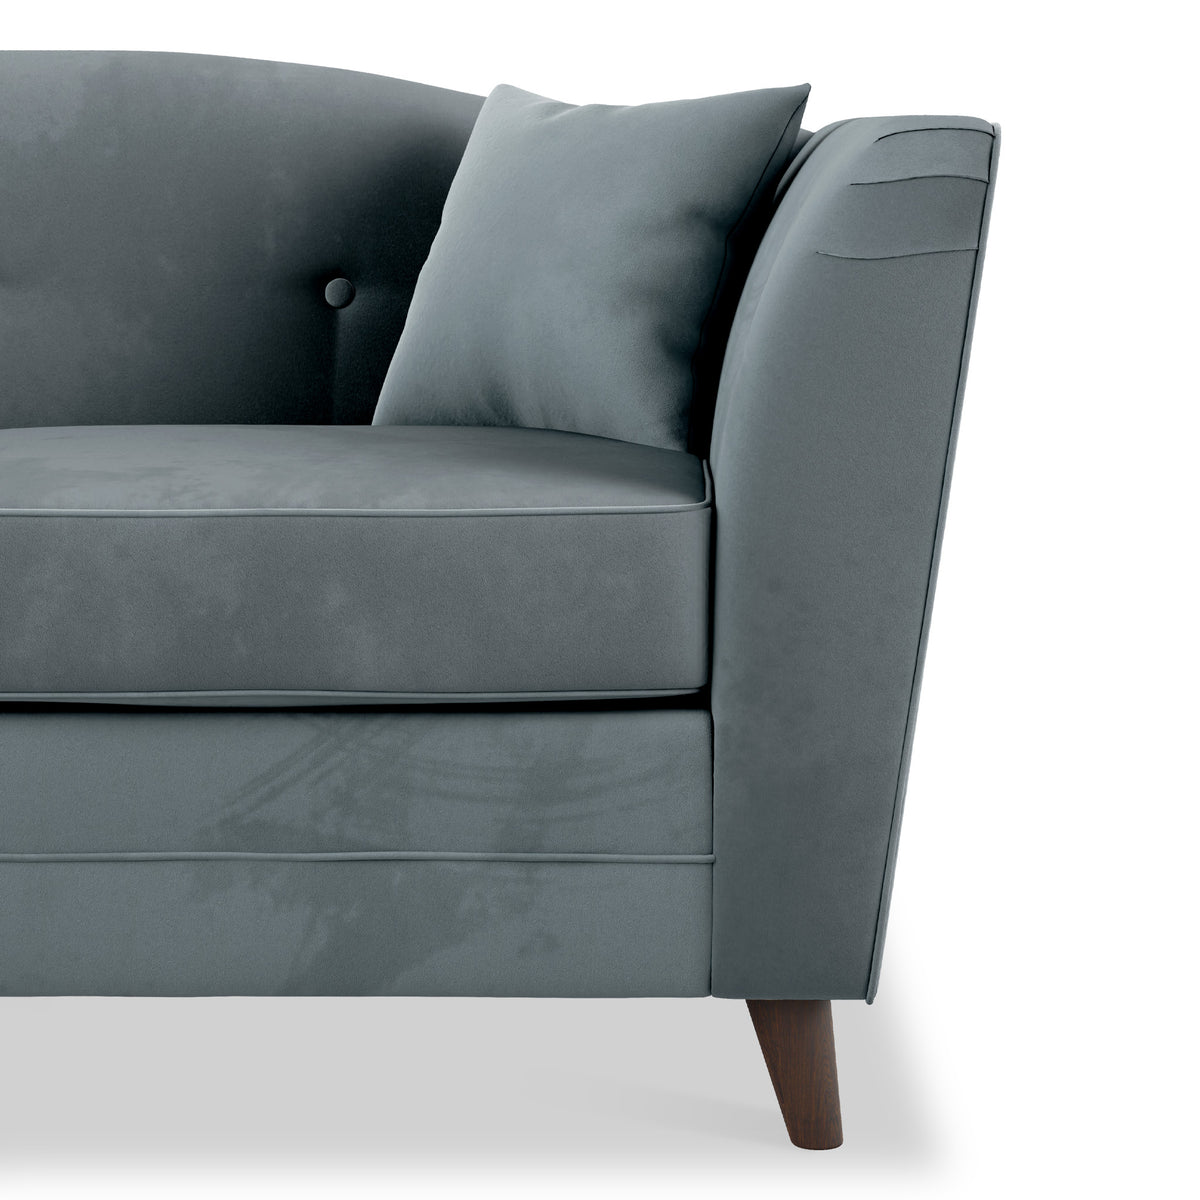 Pippa Airforce Blue Plush Velvet 2 Seater Sofa from Roseland Furniture